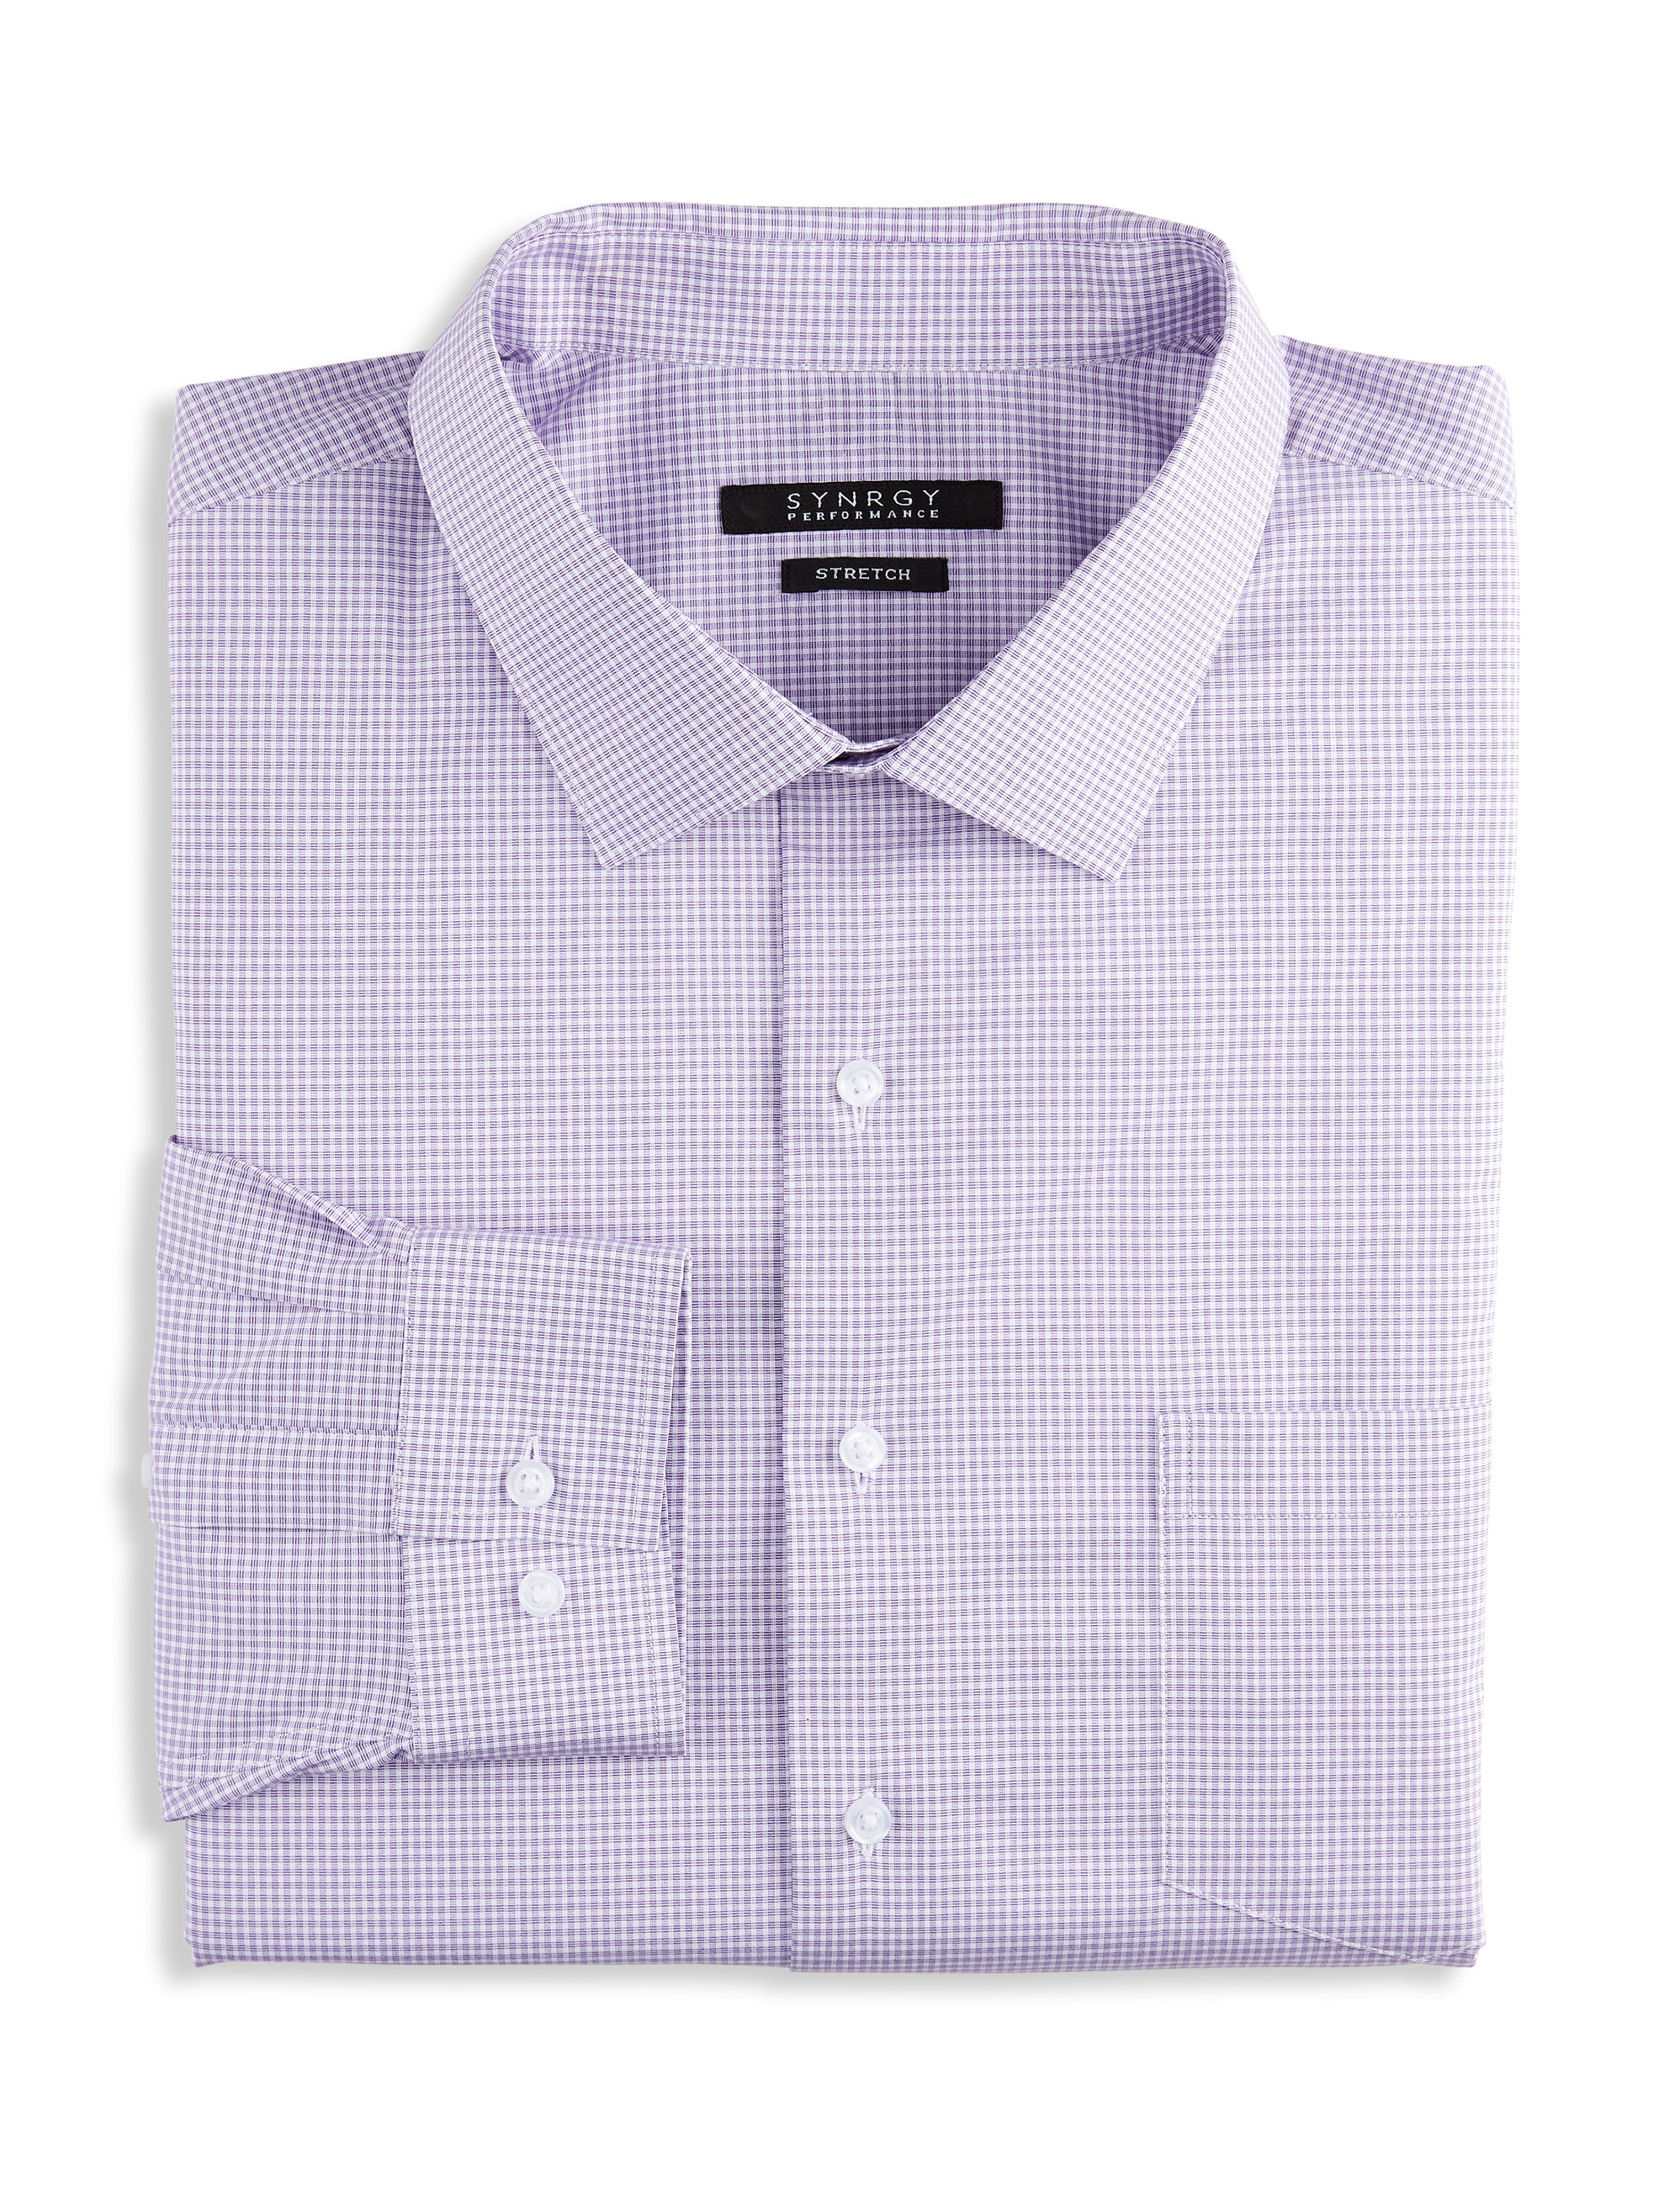 Mini Grid Patterned Dress Shirt